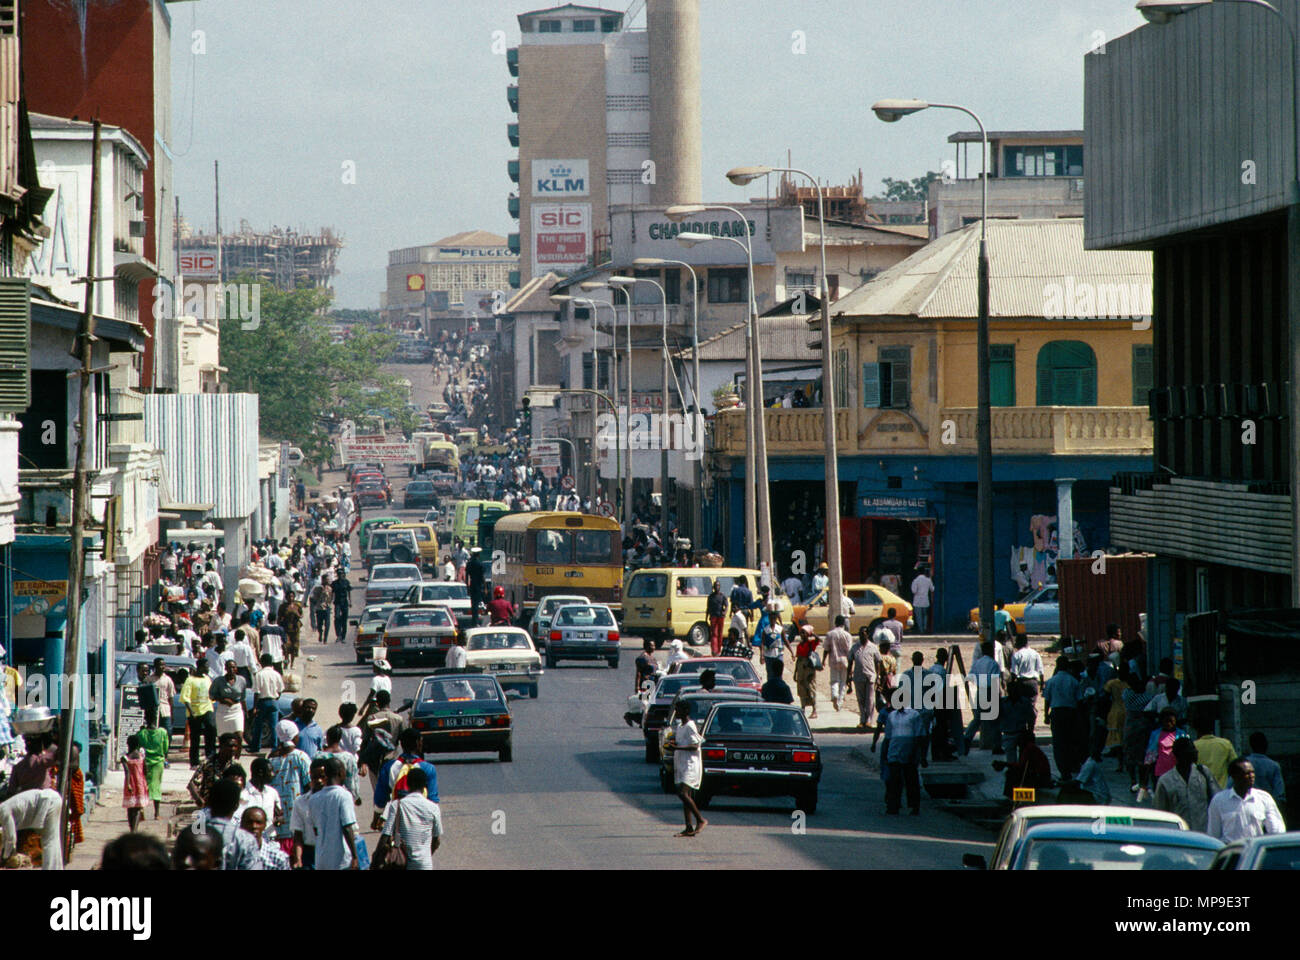 Ghana, Accra, Busy street scene in the city centre. Stock Photo